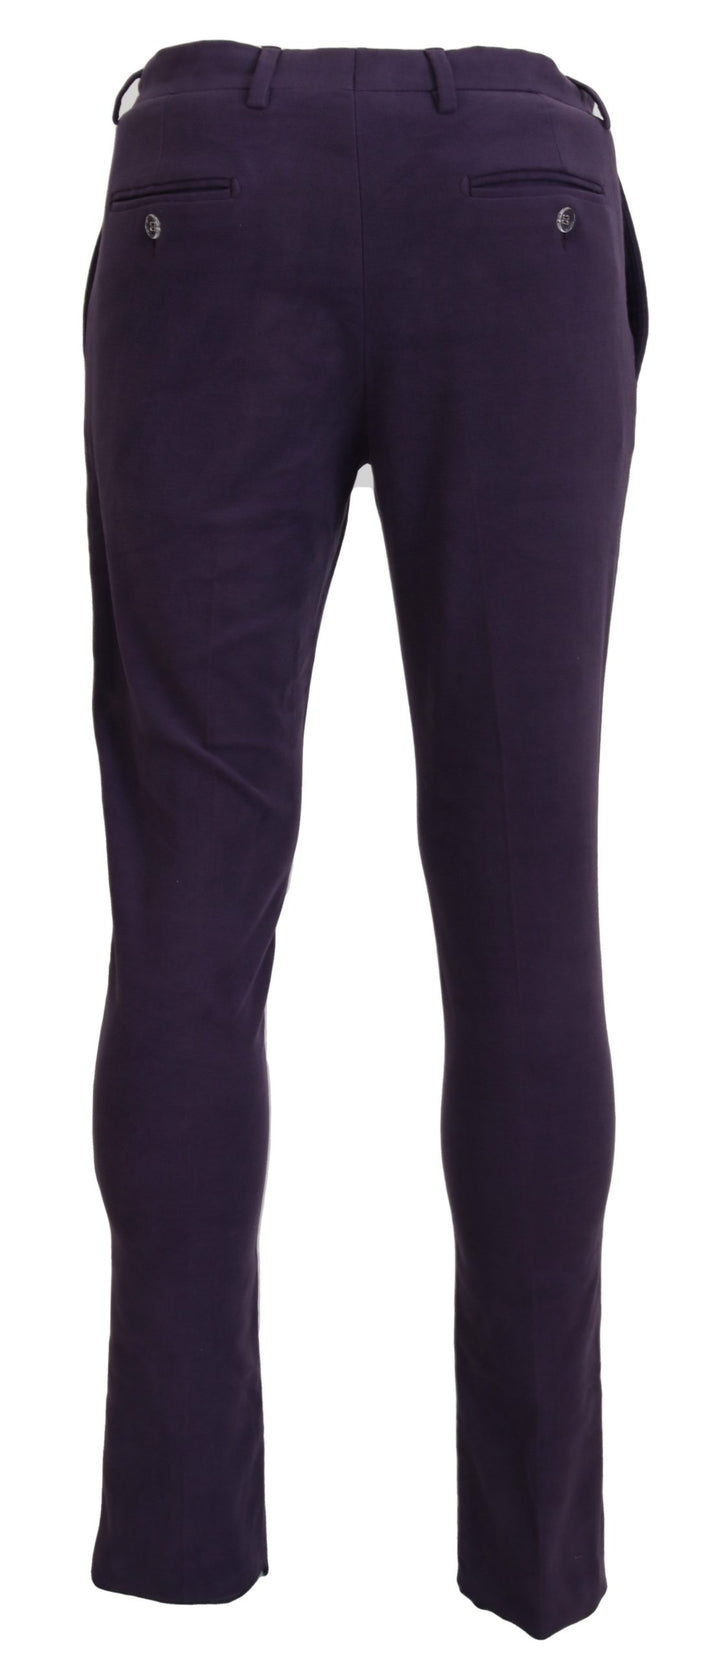 BENCIVENGA Purple Pure Cotton Tapered s Pants